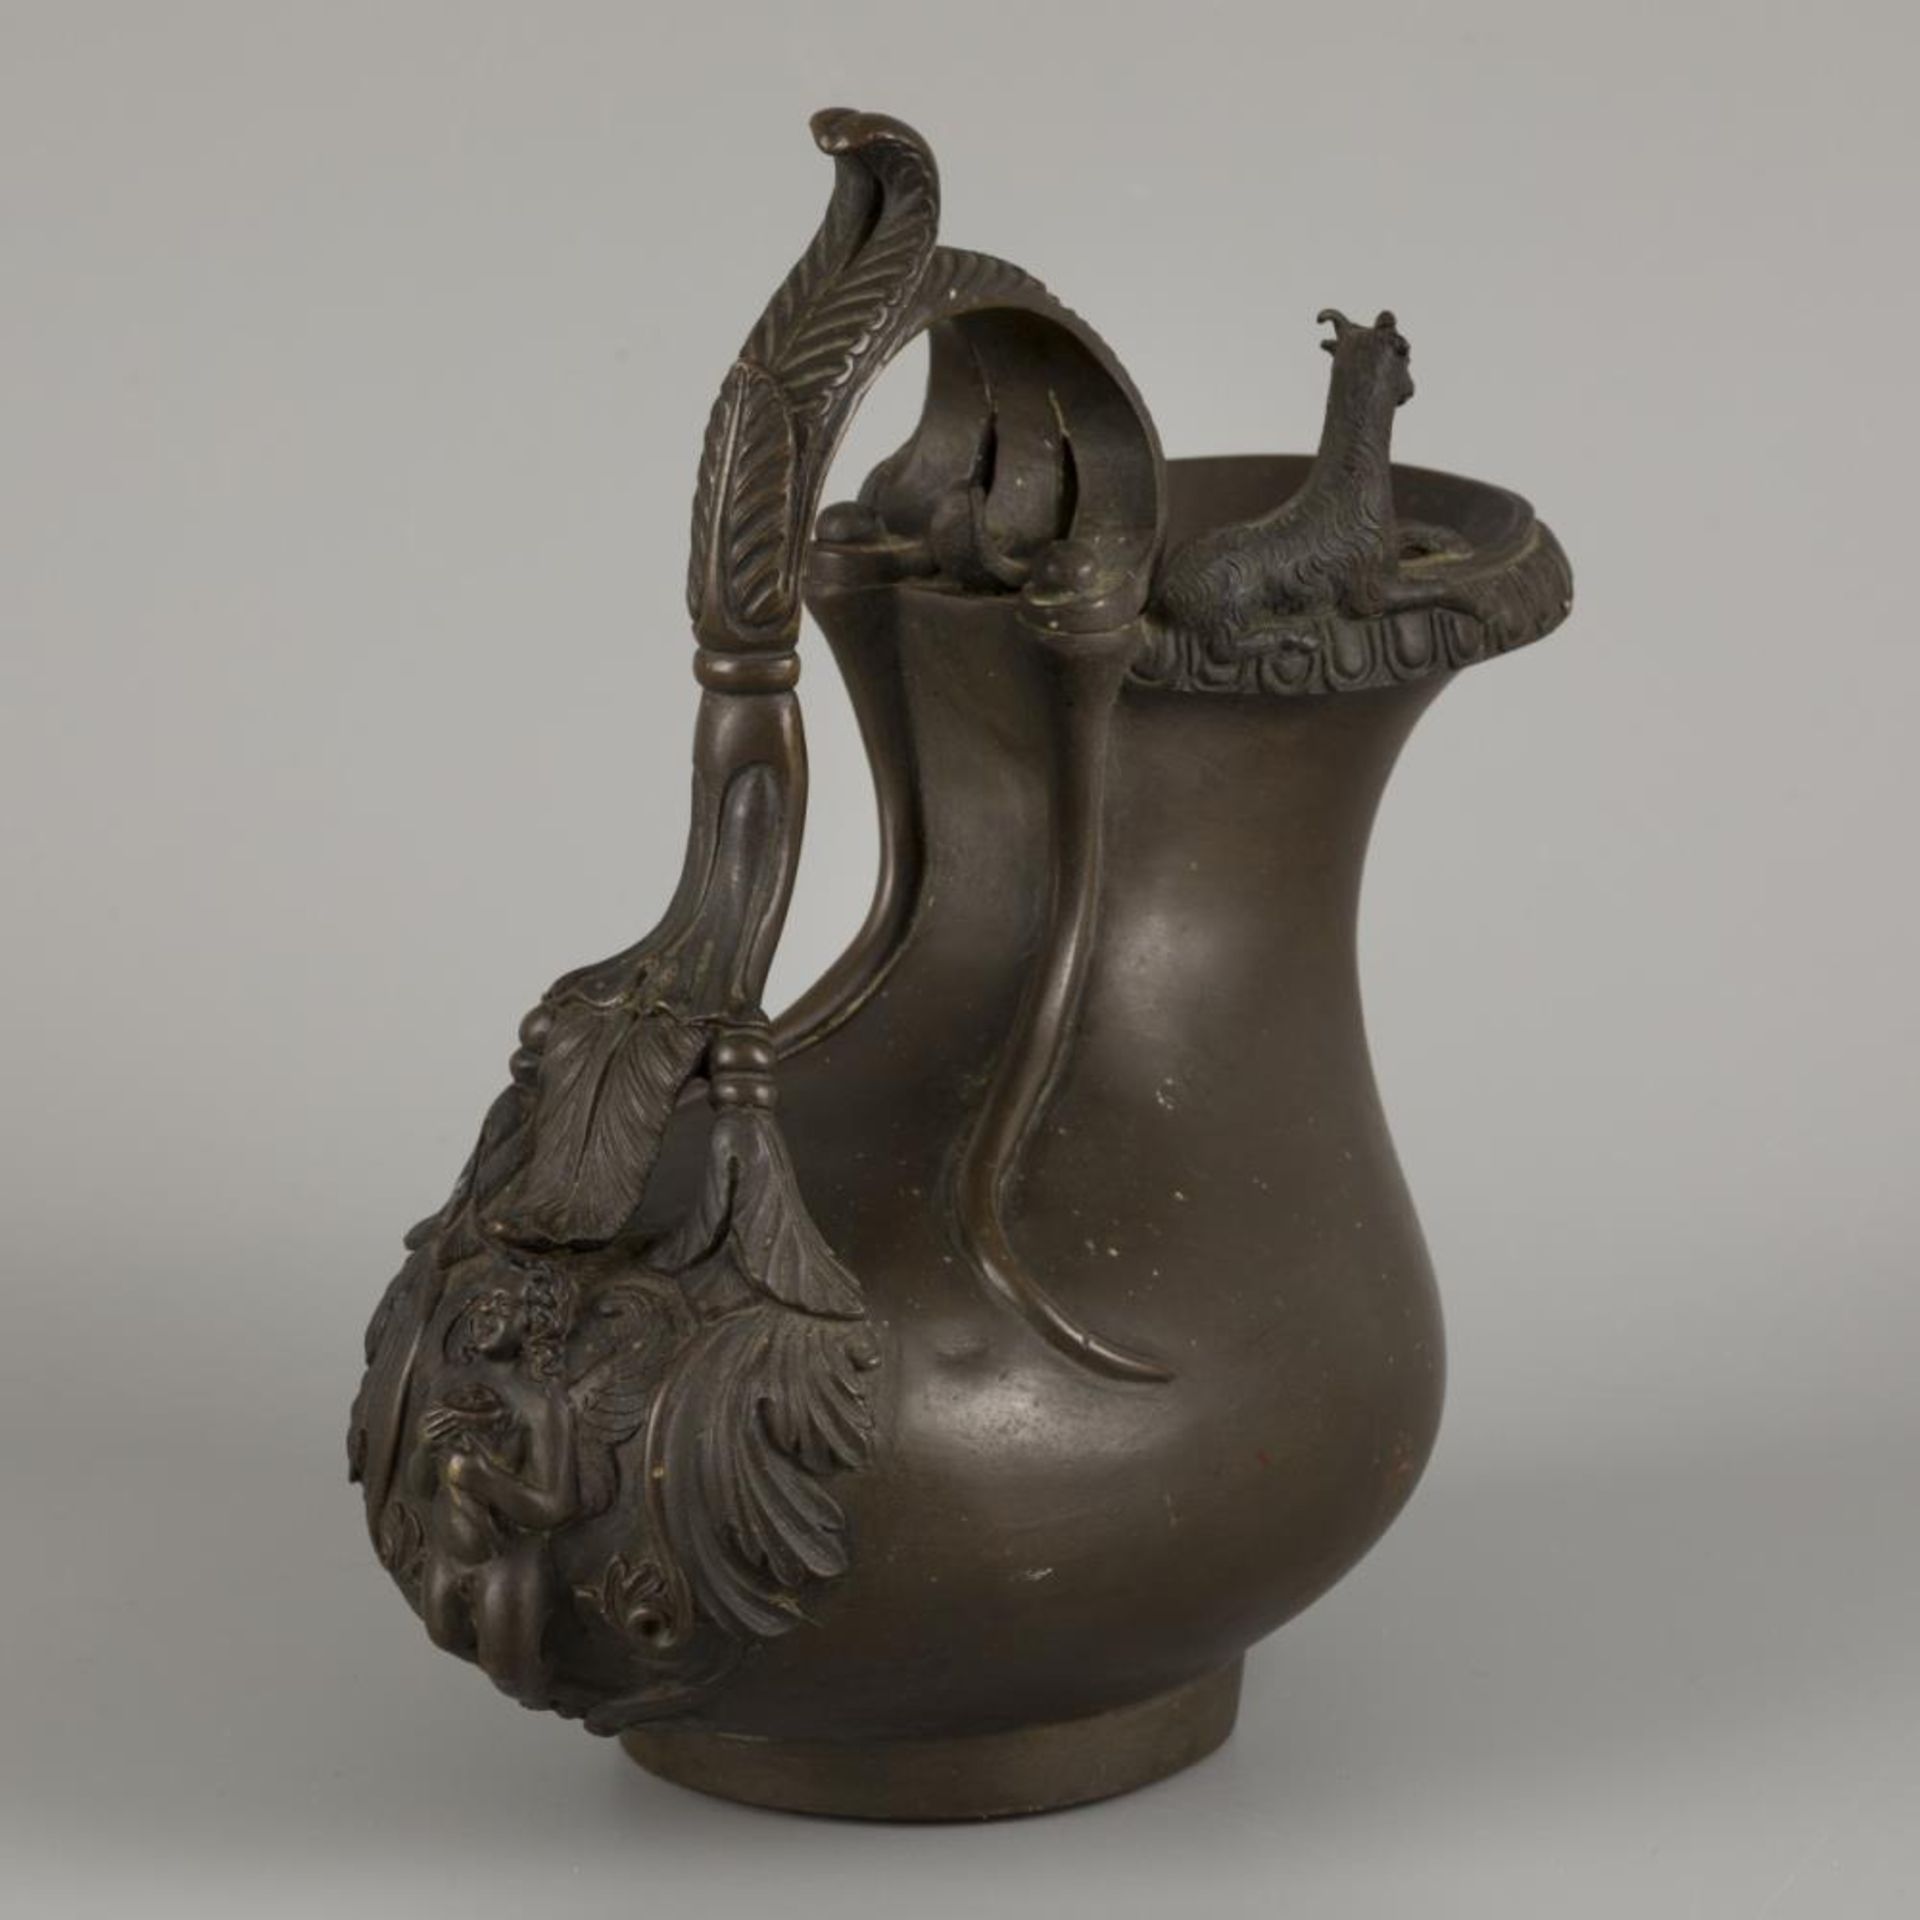 A Grand Tour souvenir bronze Askos jug, after earlier Roman example, Italy, ca. 1860. - Image 2 of 2